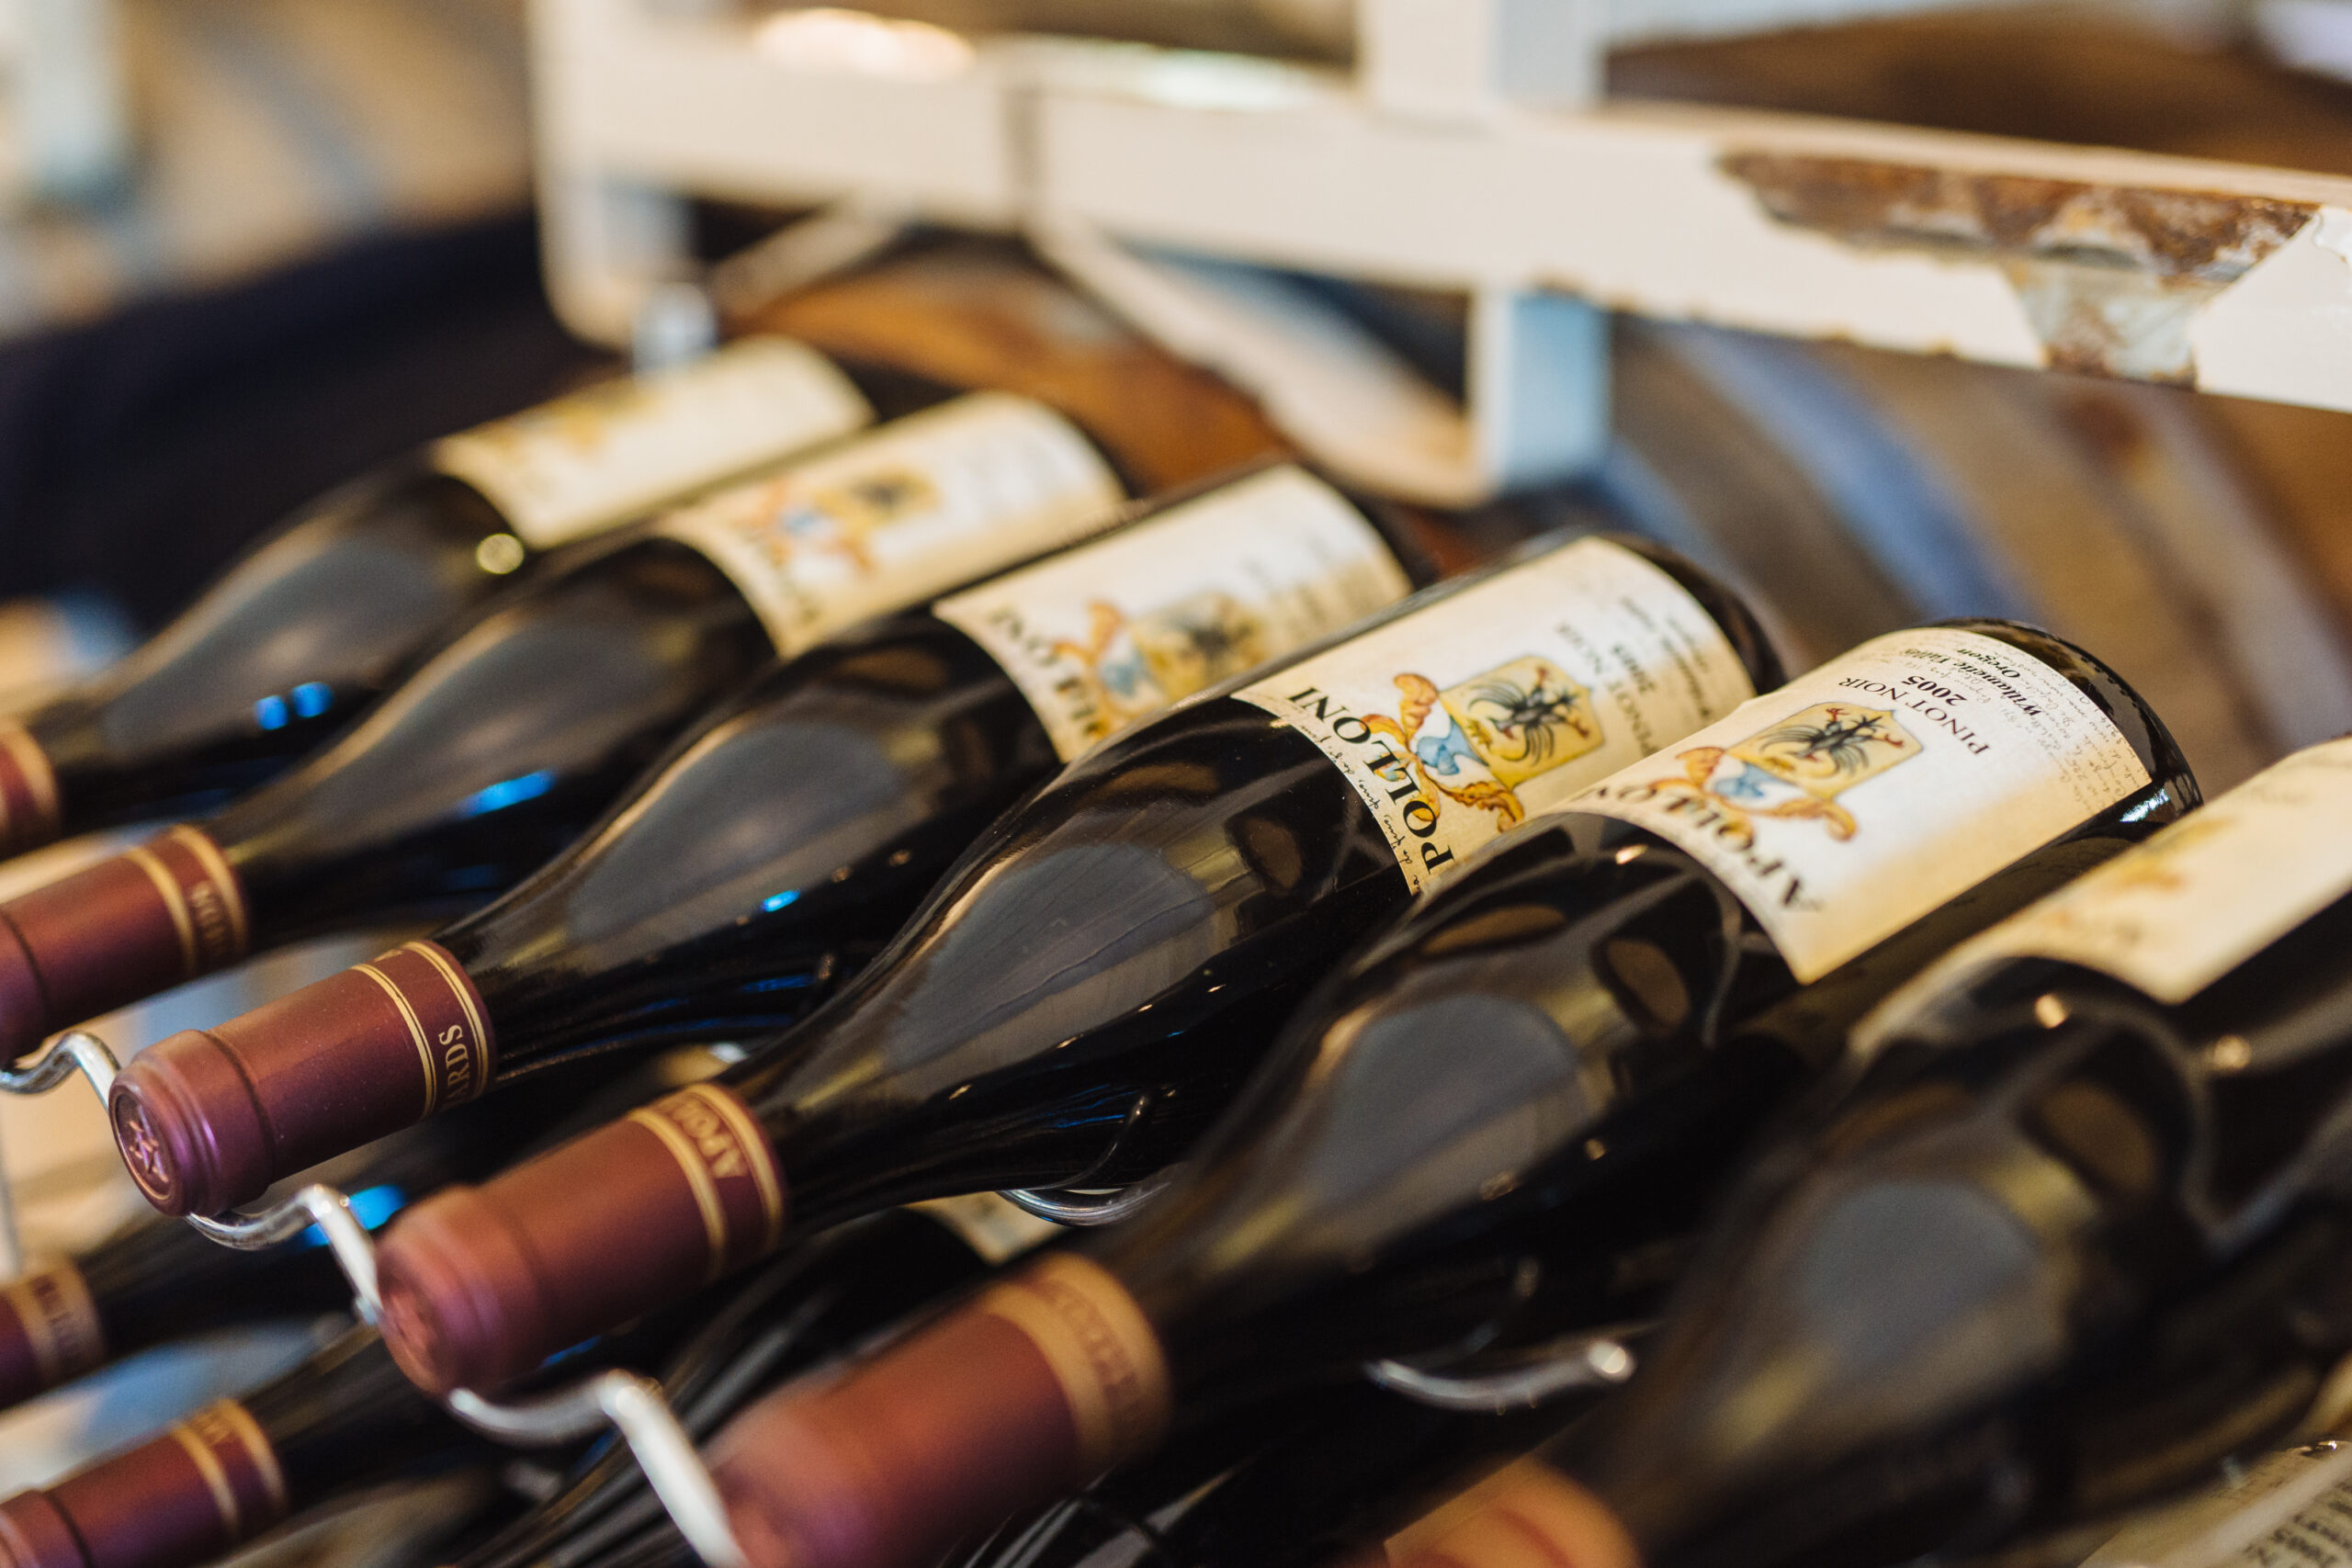 Apolloni Vineyards wine bottles